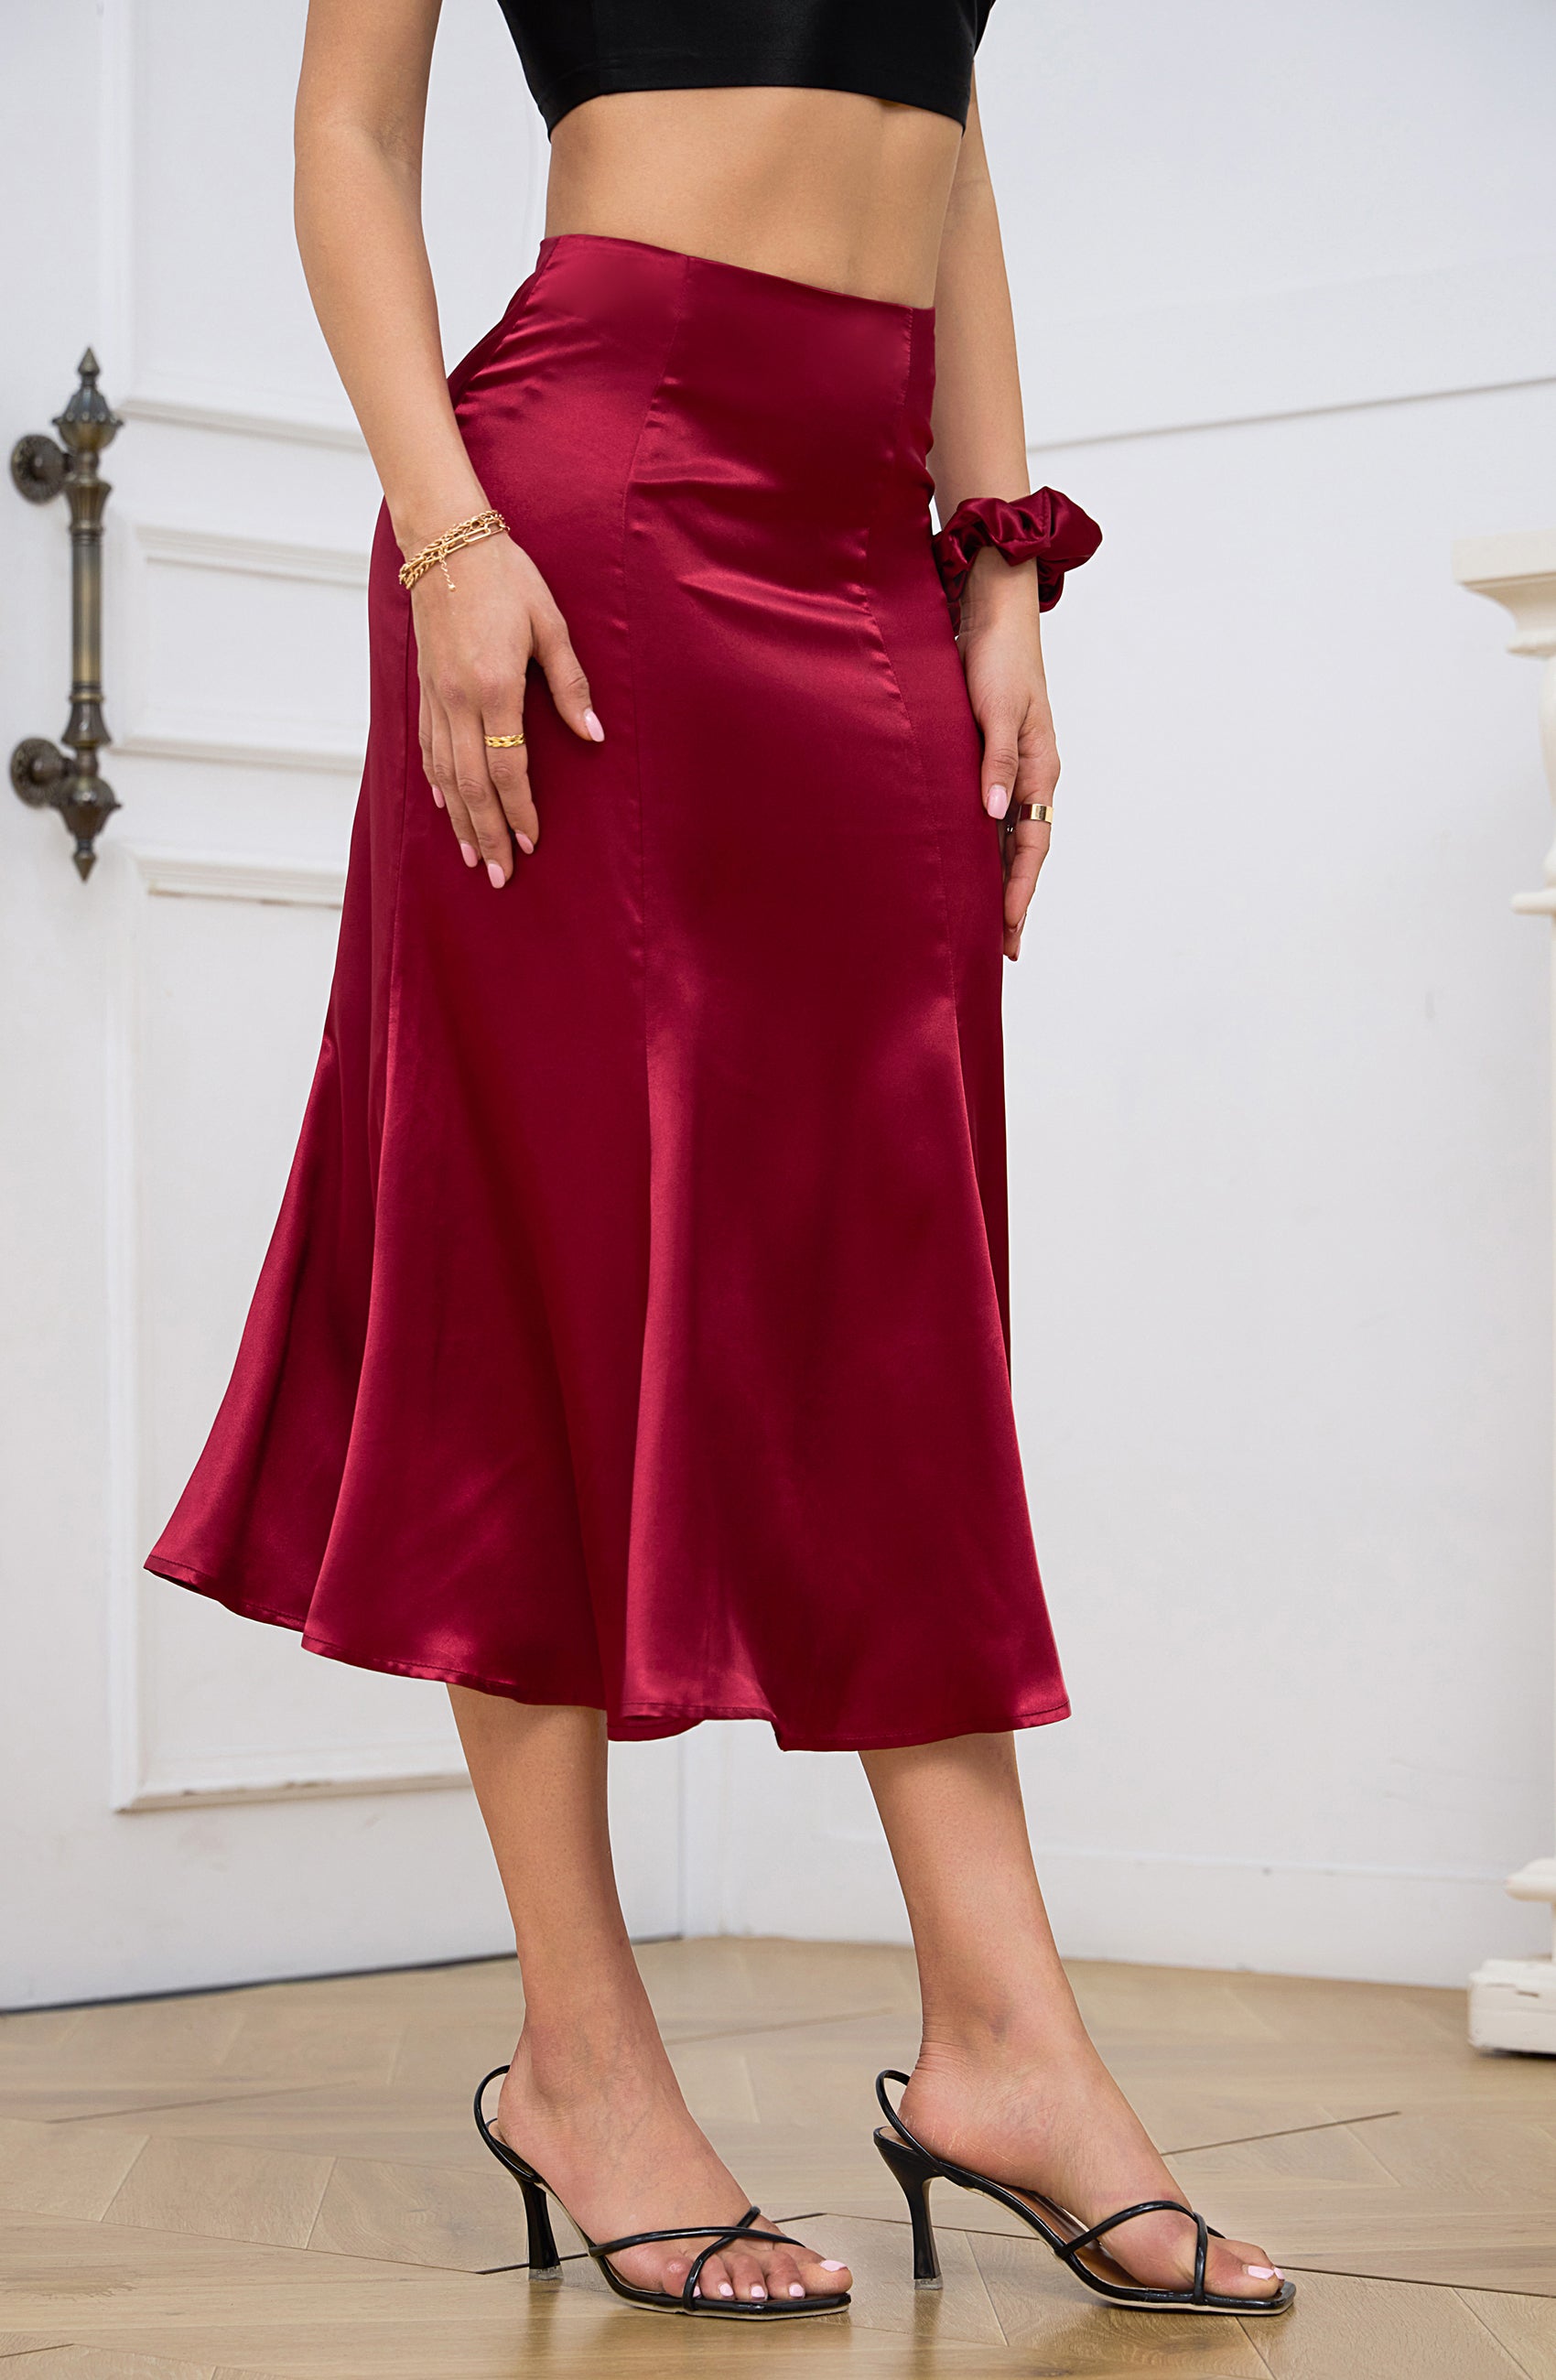 Alcea Rosea 女式缎面中长裙 A 字型高腰真丝喇叭纯色吊带裙休闲优雅酒红色